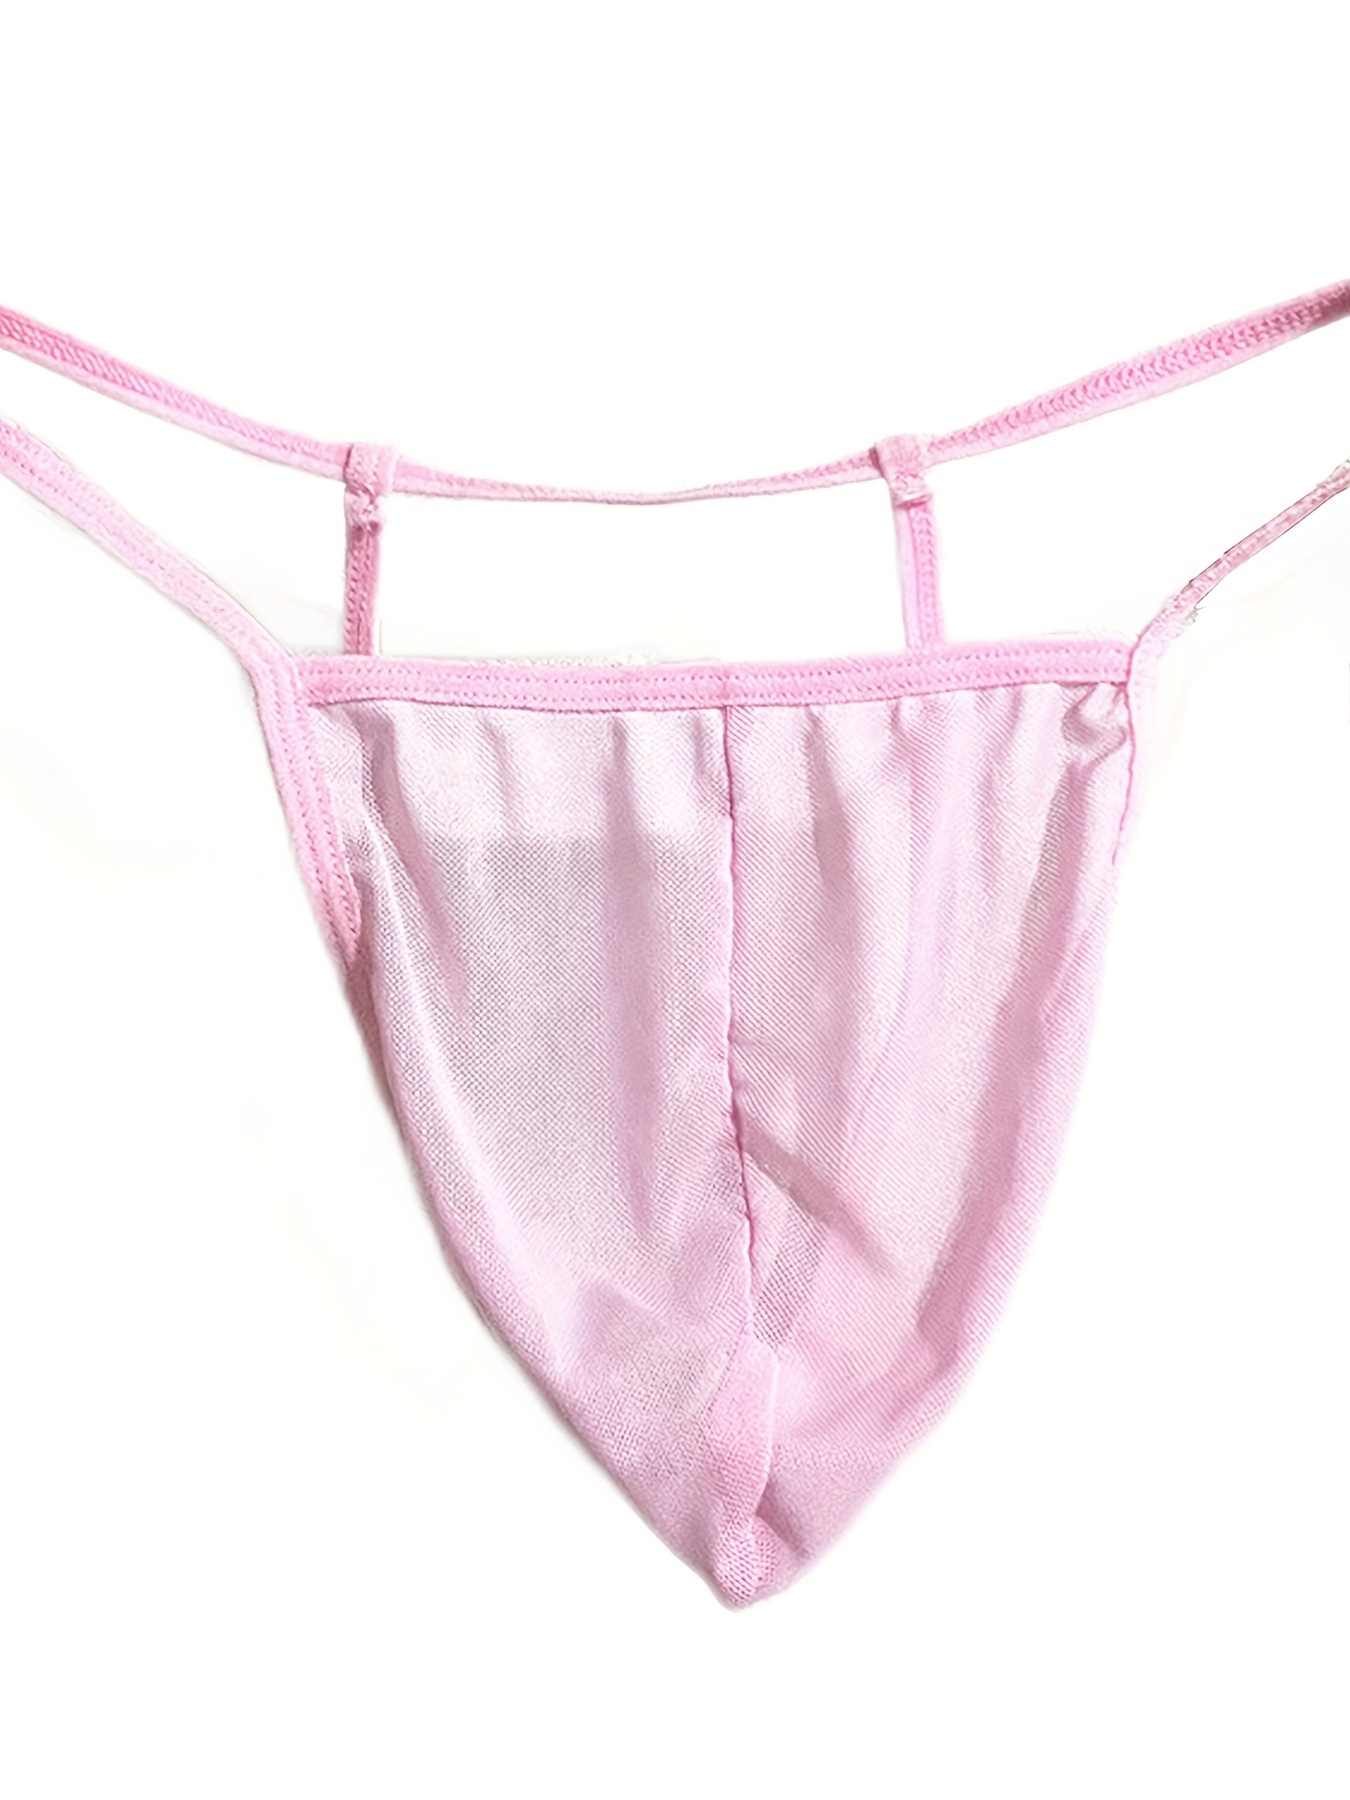 Women's Mesh See Through Panties Thong G-string Underwear Bikini Briefs  Knickers